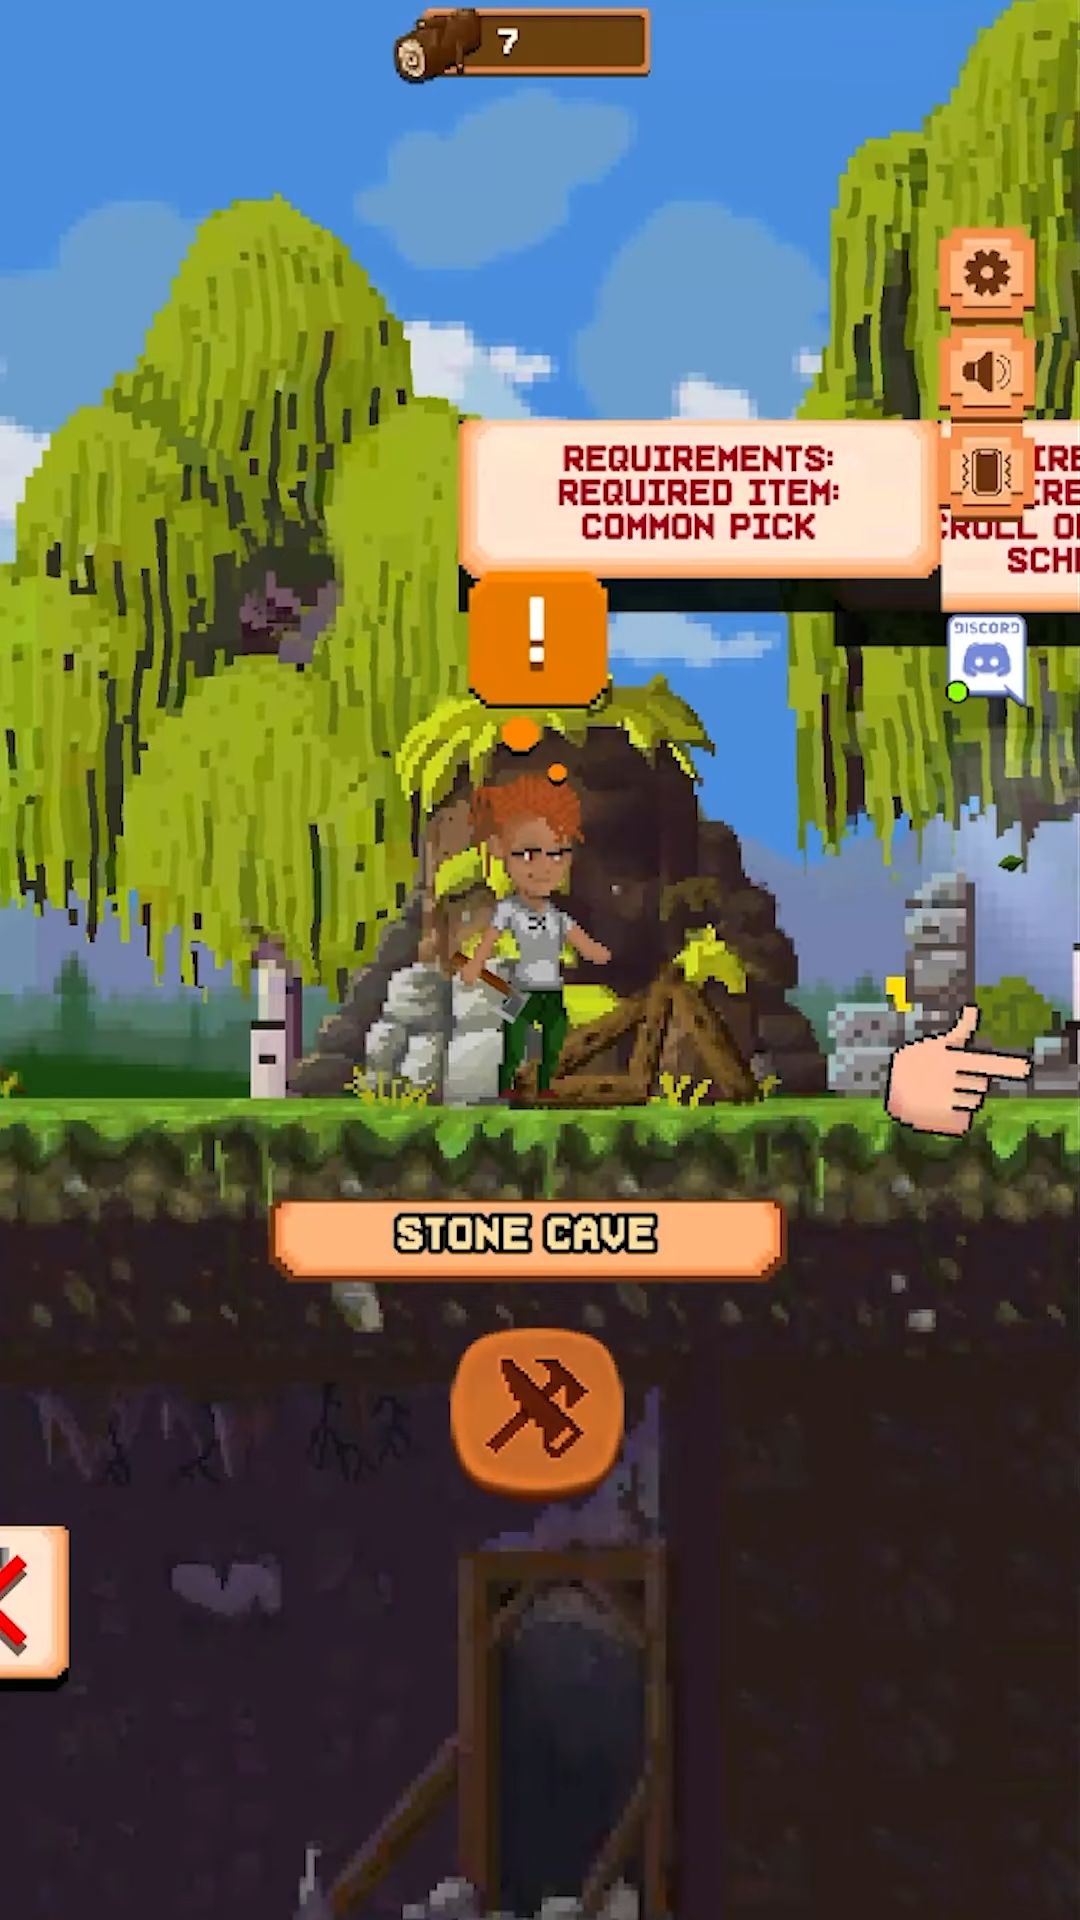 Скачать Miners Settlement: Idle RPG: Android Кликеры игра на телефон и планшет.